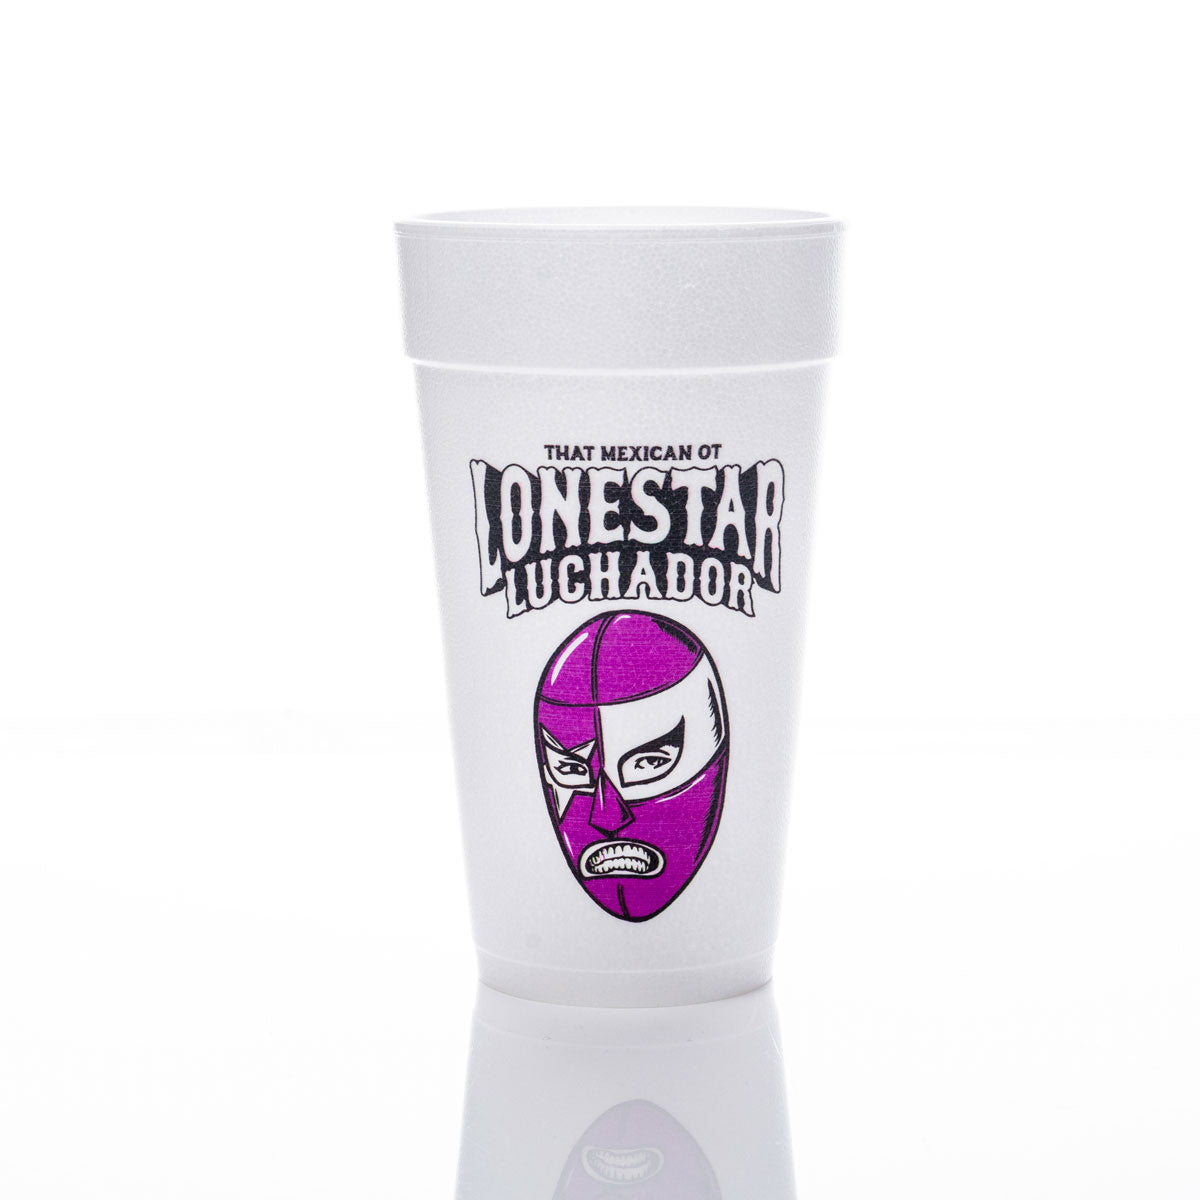 Lonestar Luchador Styrofoam Cup